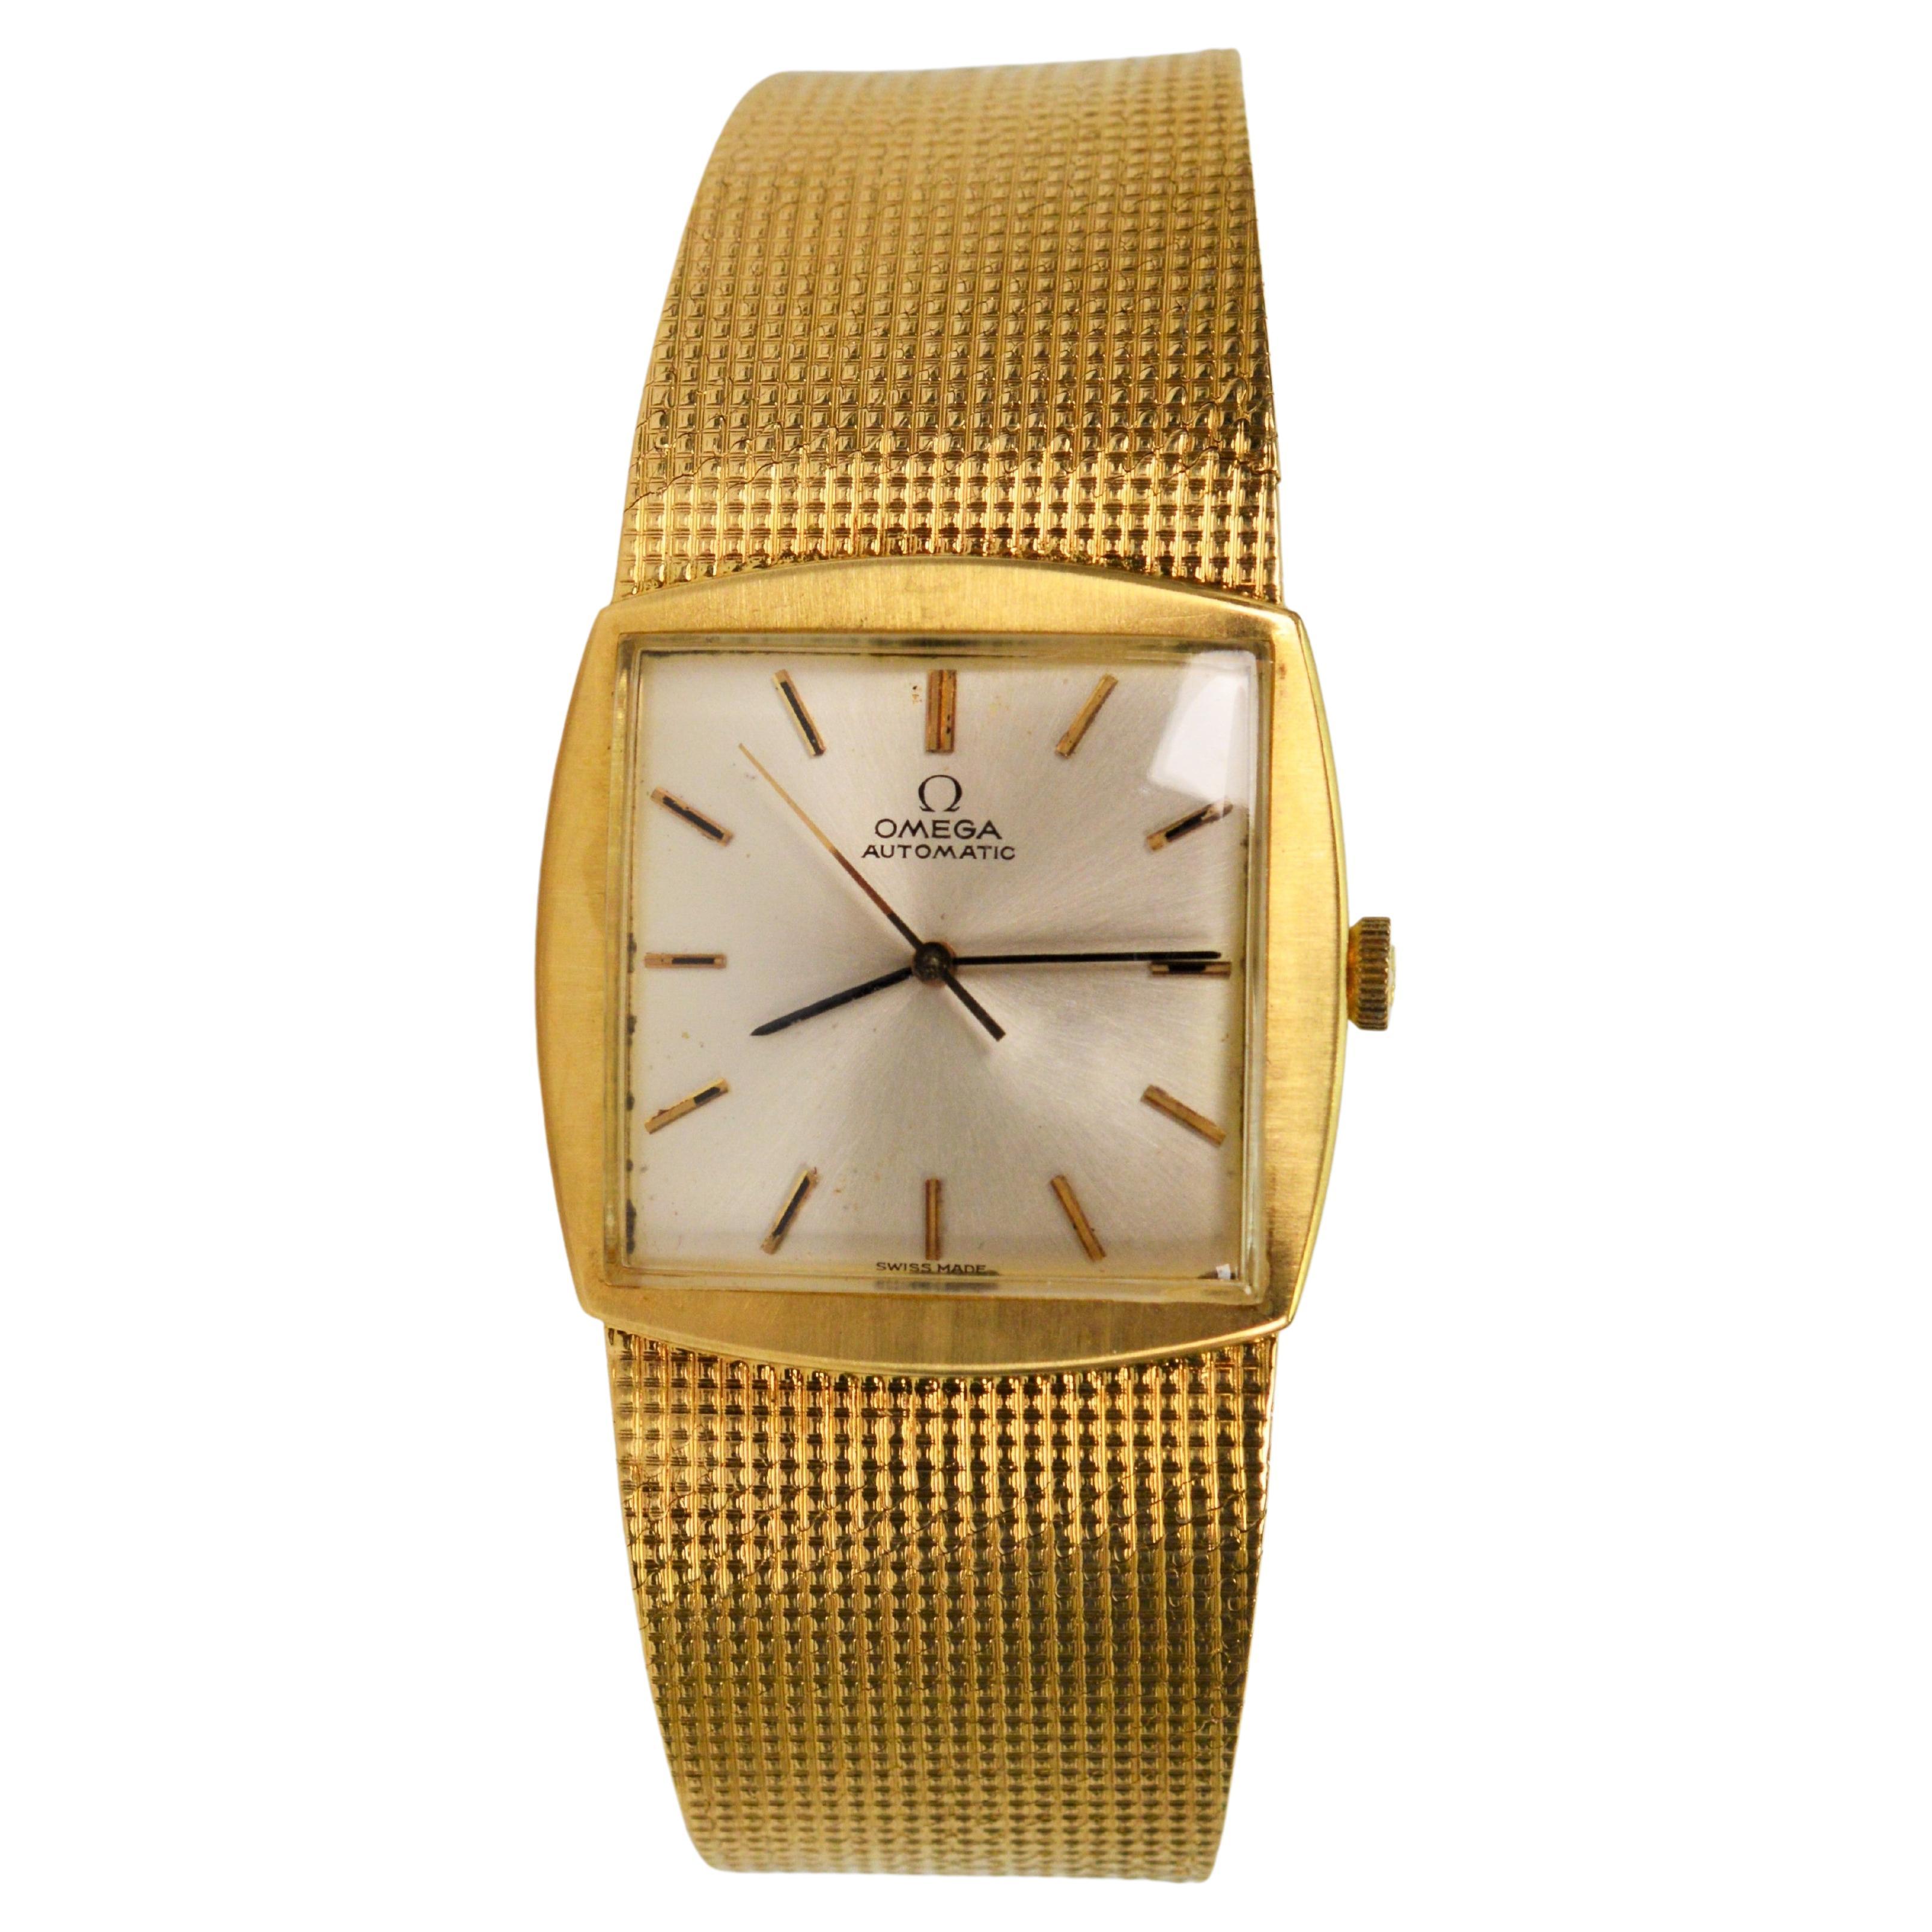 Omega 18 Karat Yellow Gold Men's Dress Wrist Watch with Box